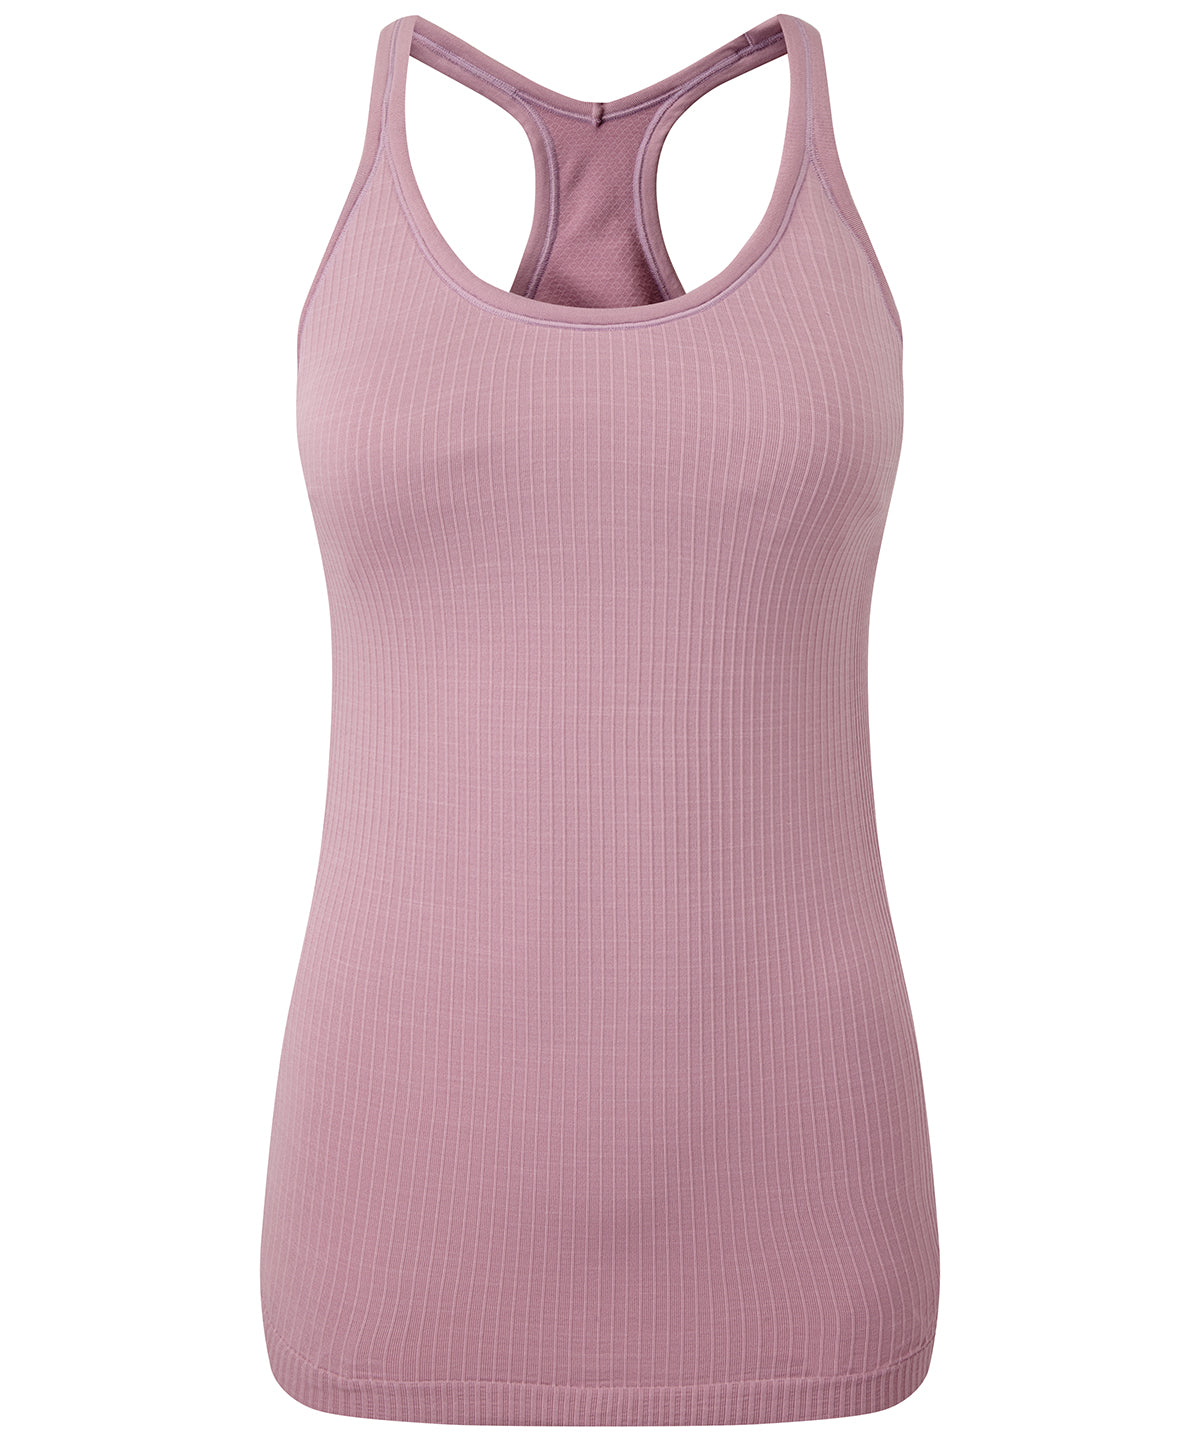 Vesti - Women's TriDri® Seamless '3D Fit' Multi-sport Sculpt Vest With Secret Support